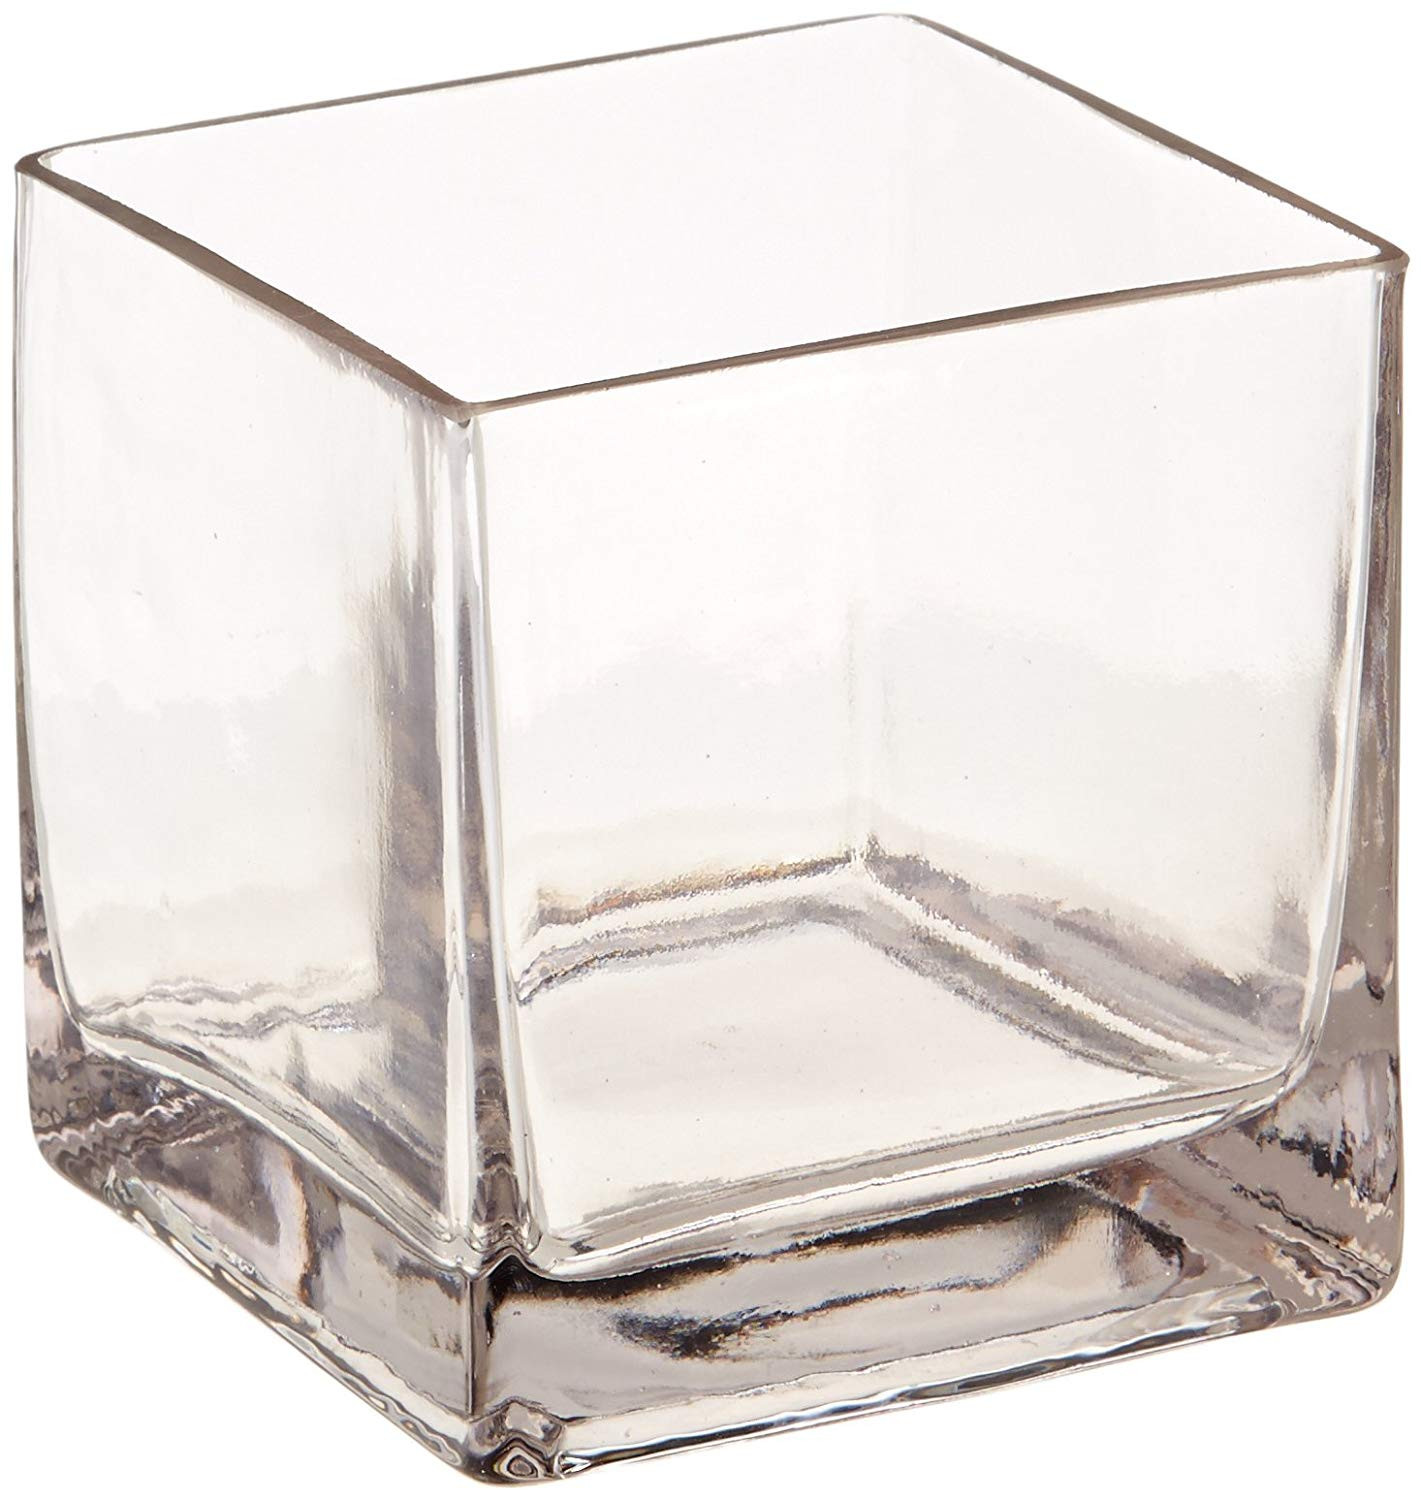 17 Lovely Cube Glass Vases Bulk 2024 free download cube glass vases bulk of amazon com 12piece 4 square crystal clear glass vase home kitchen inside 71 jezfmvnl sl1500